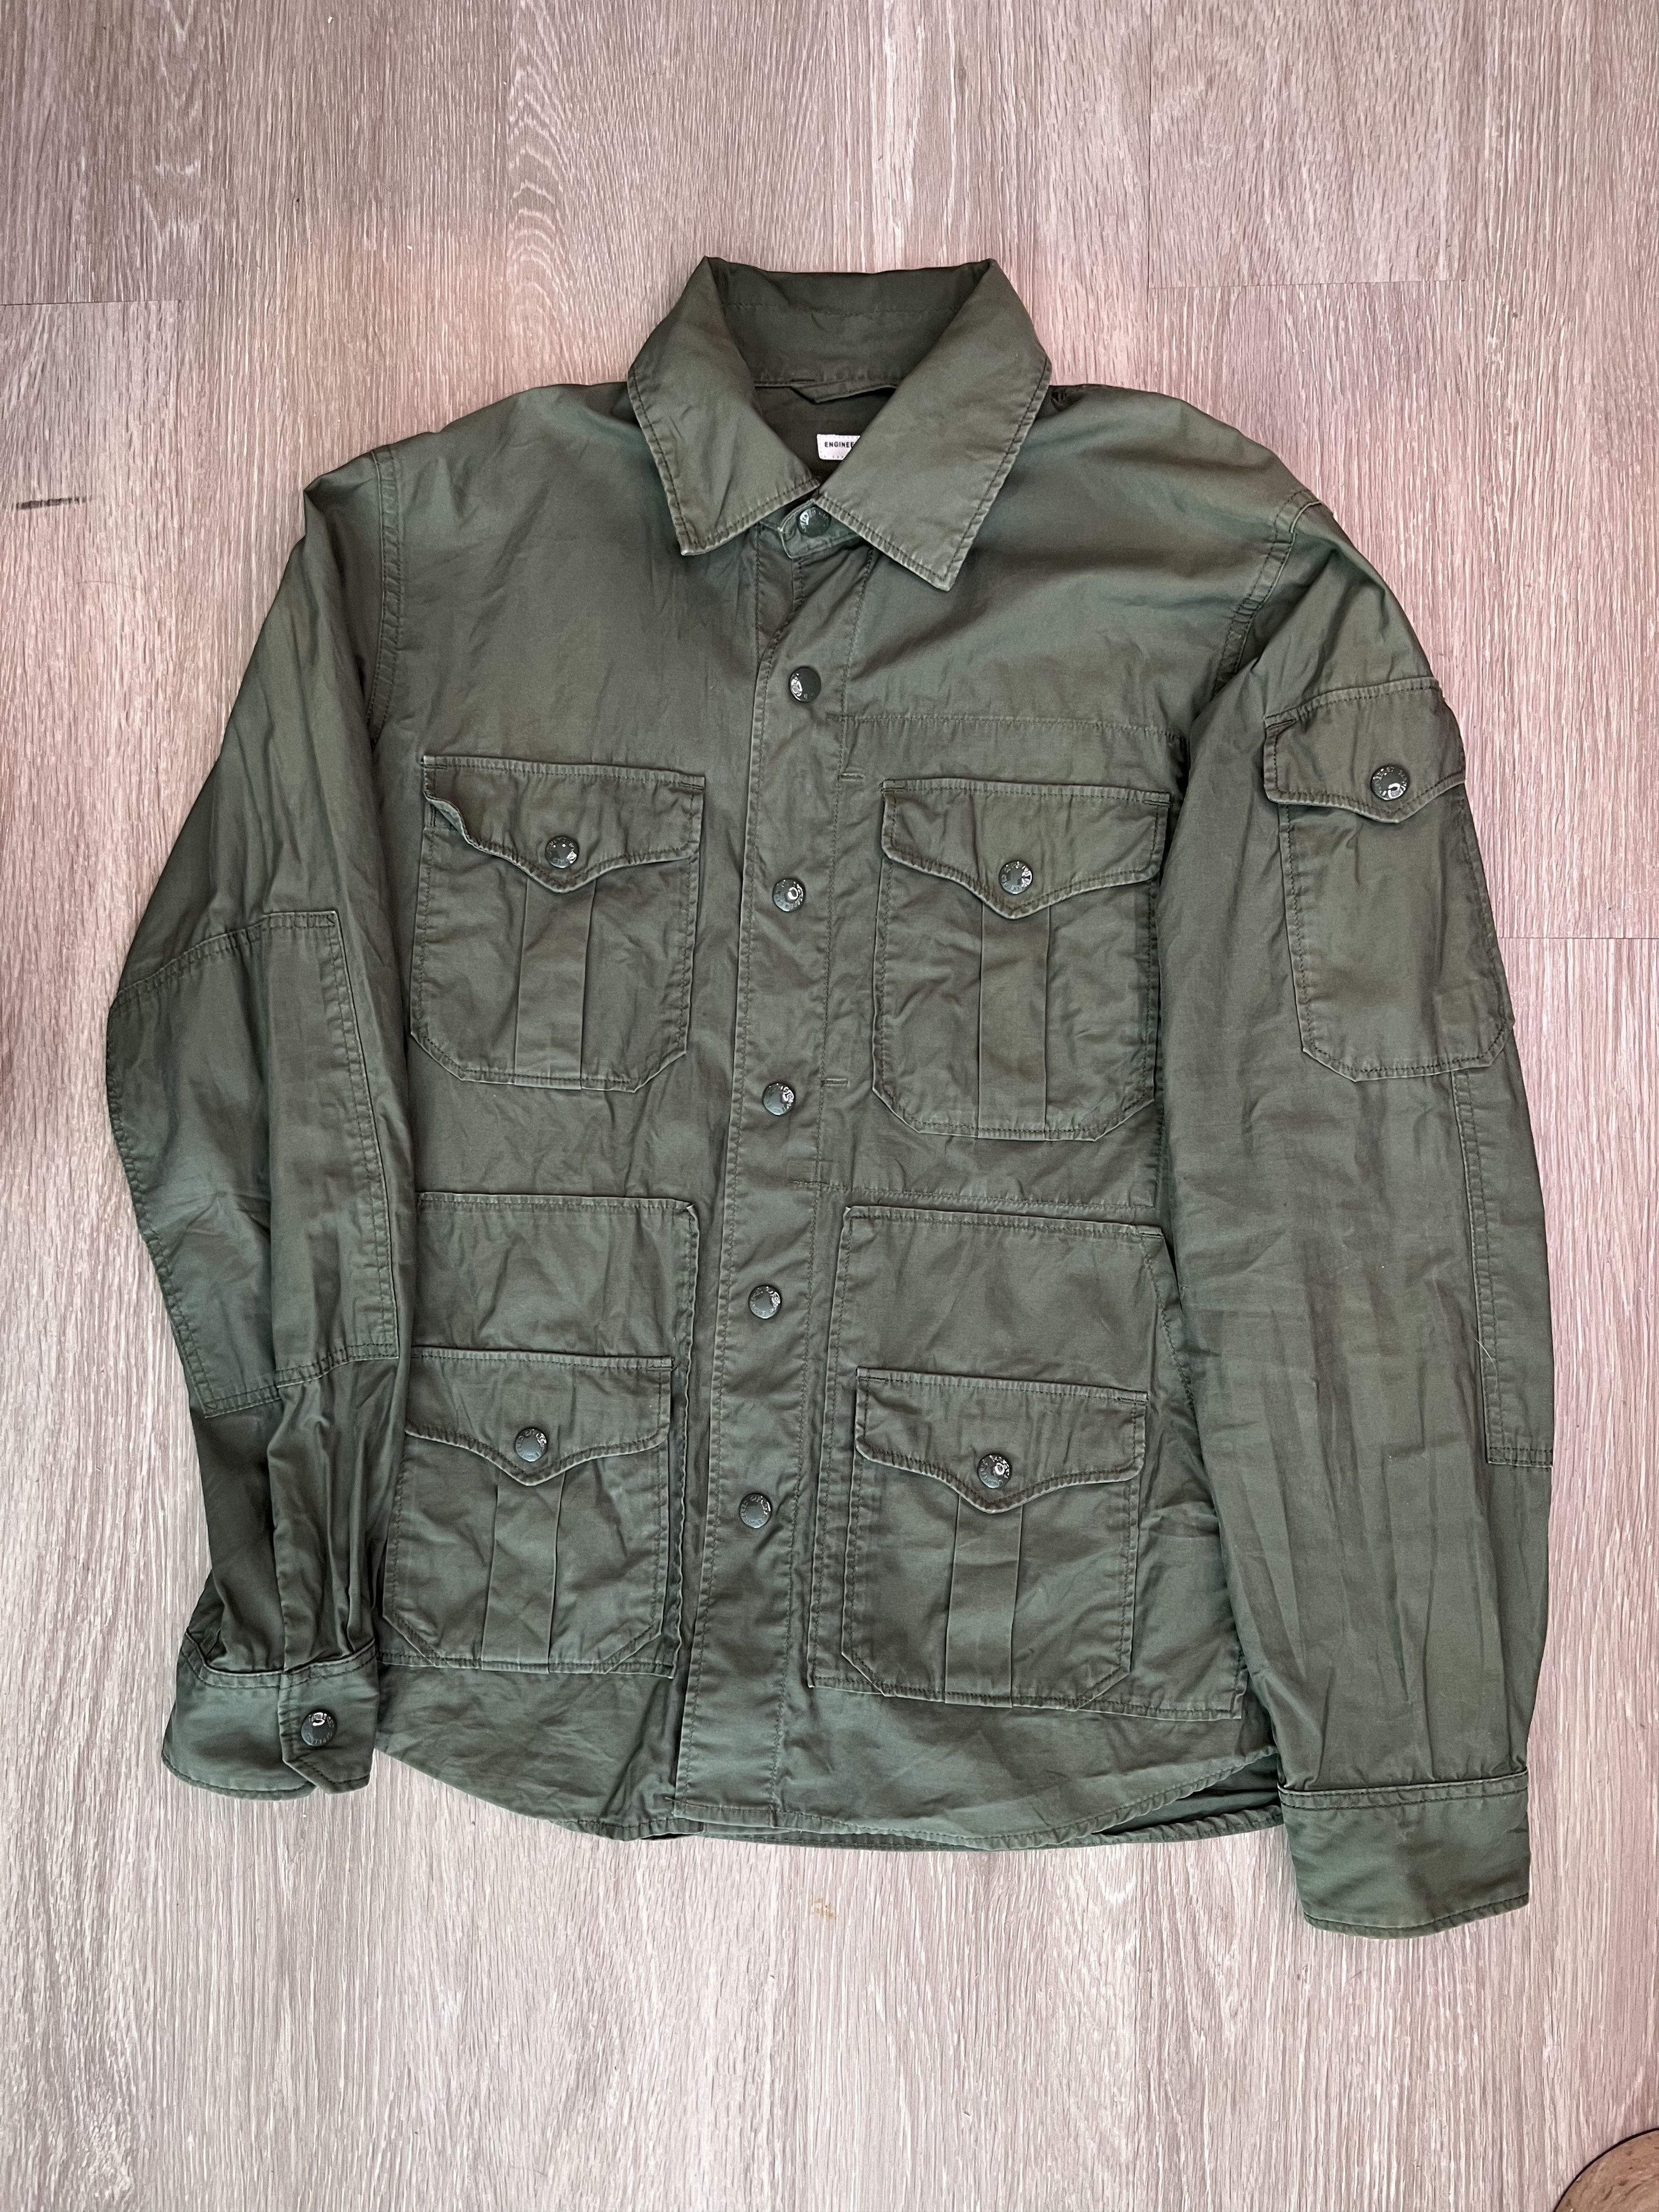 Engineered Garments SS13 Penn Shirt Jacket | Grailed